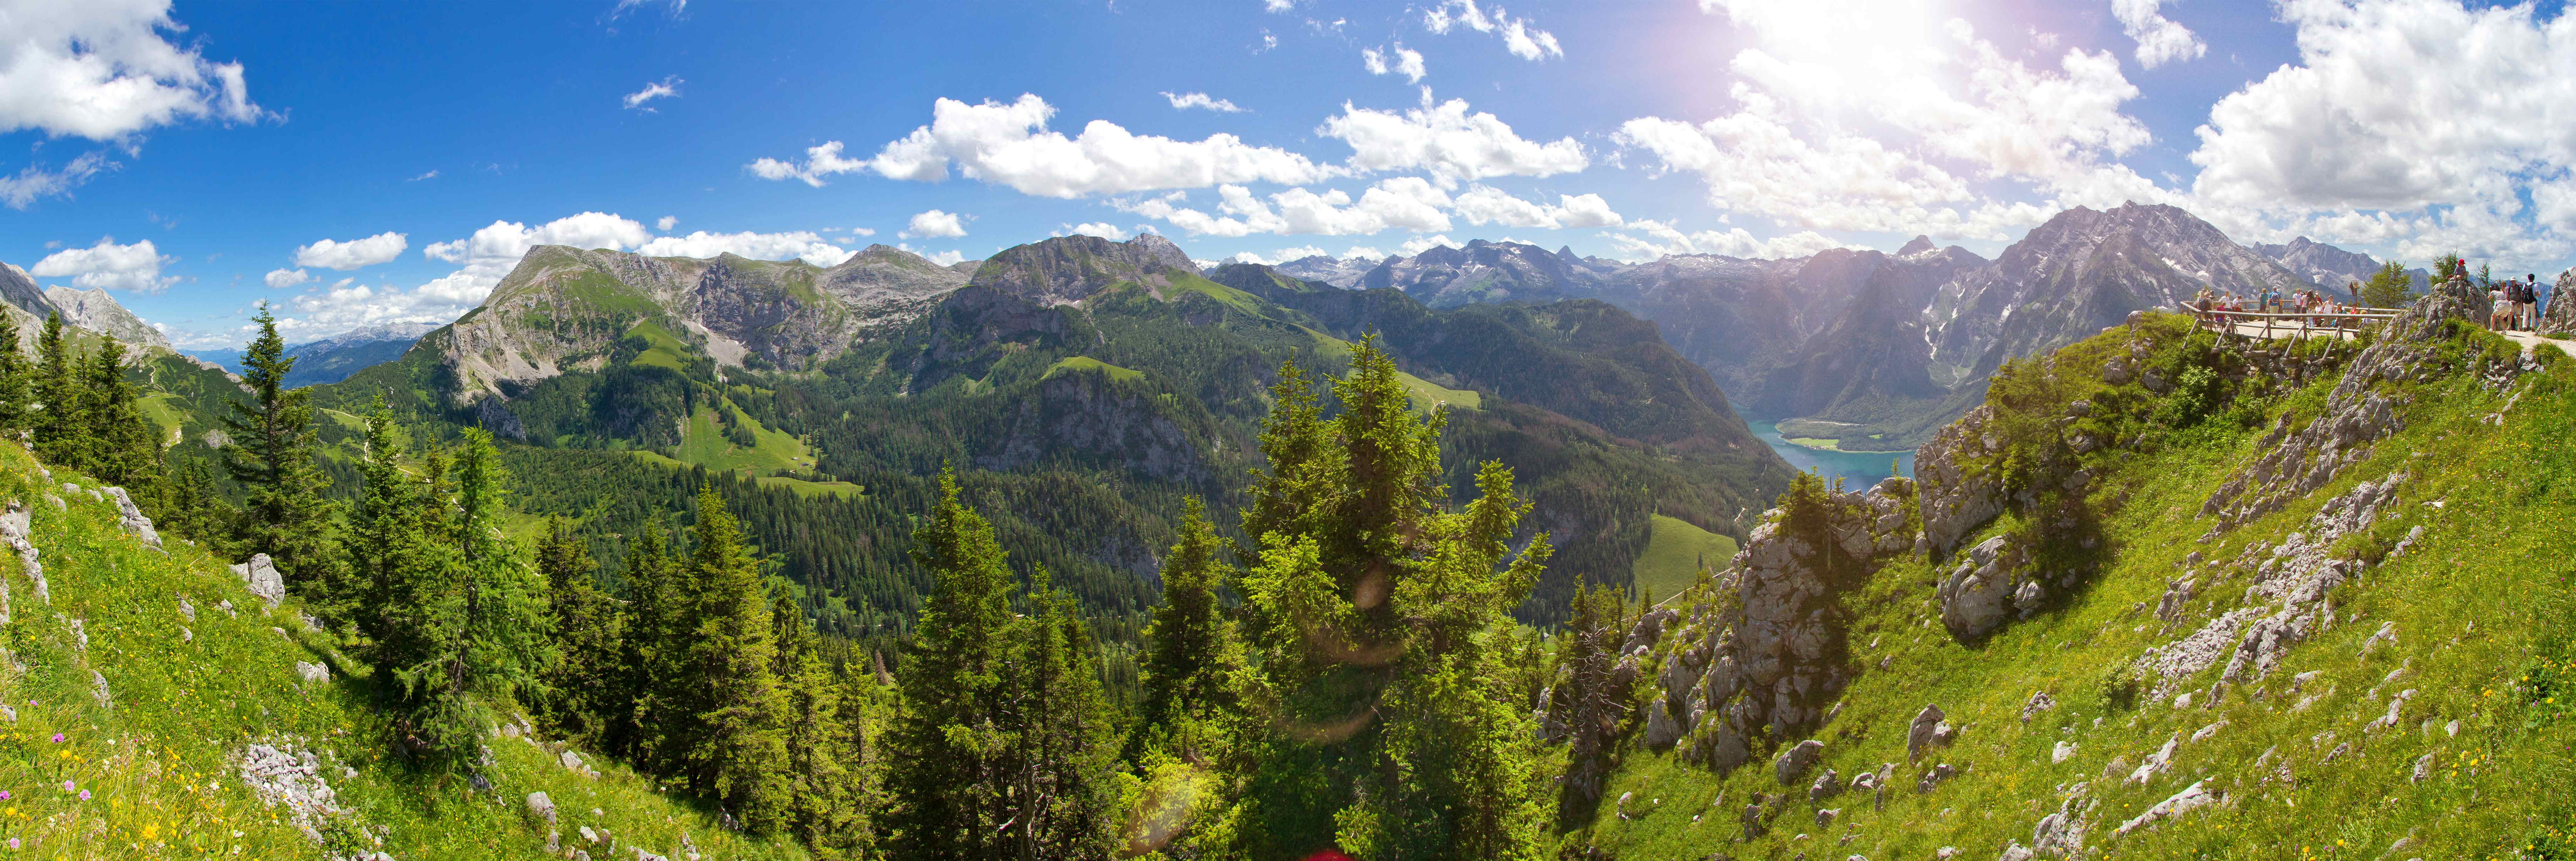 Camping im Berchtesgadener Land